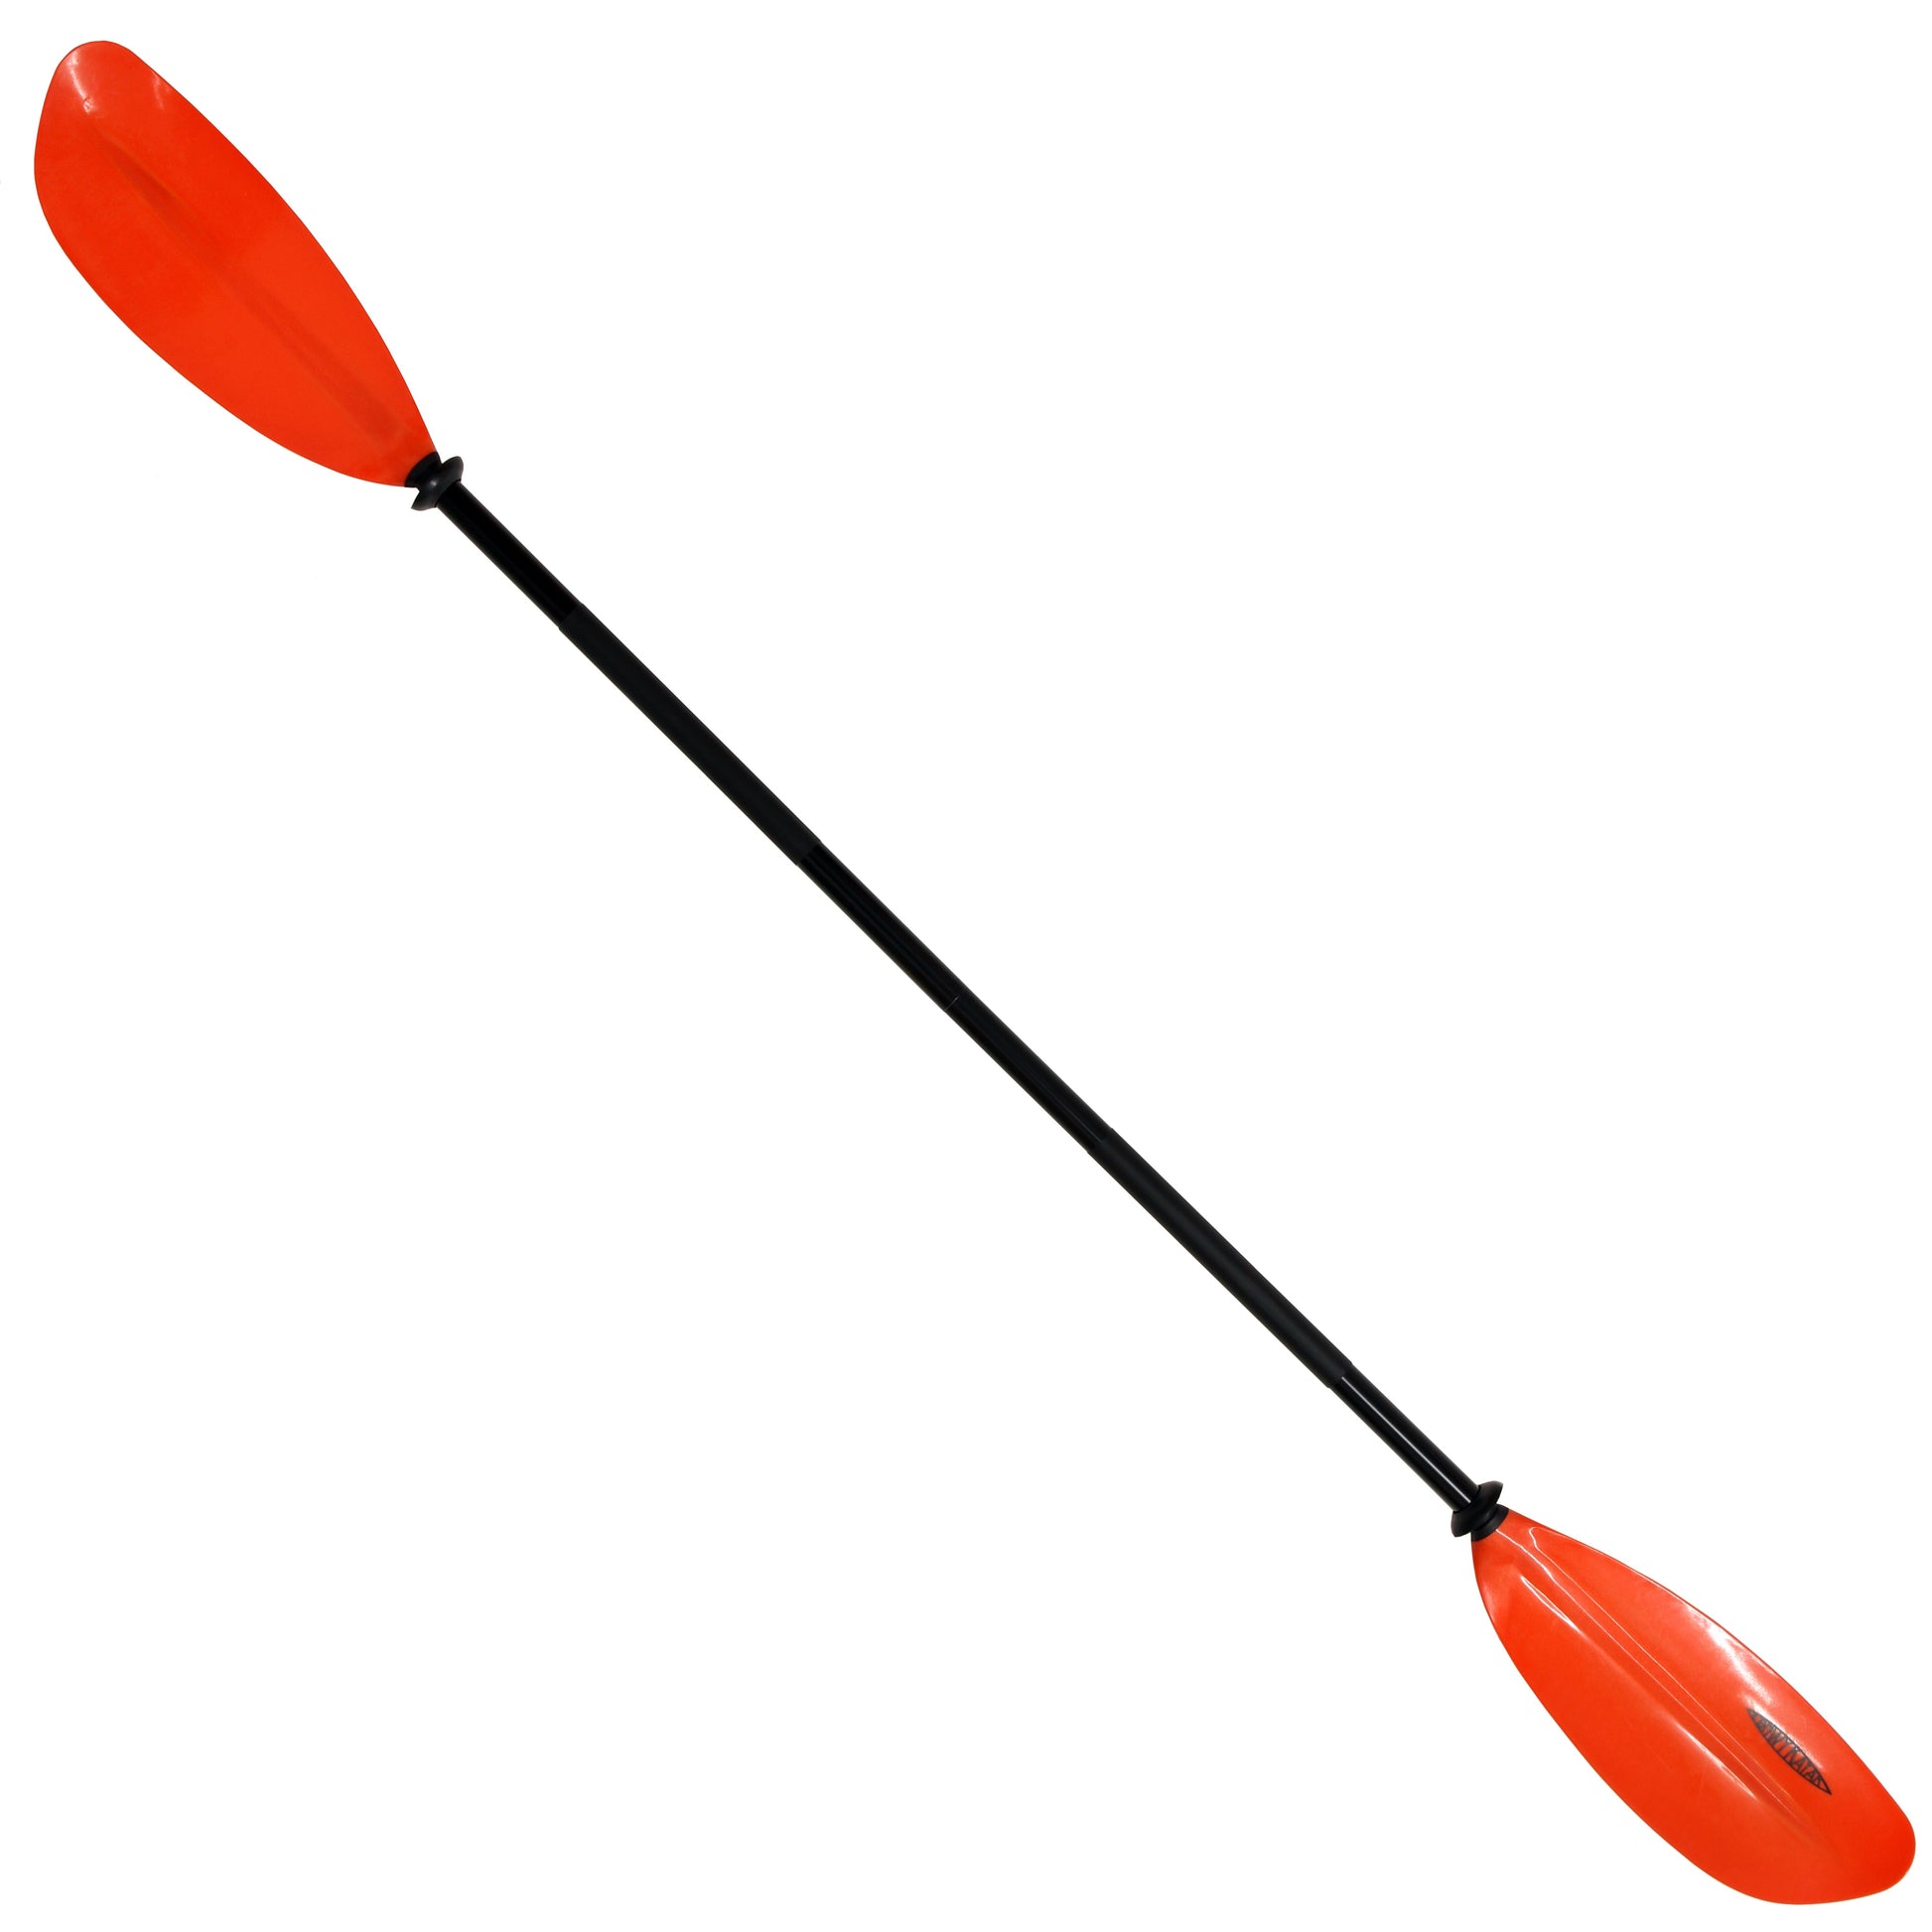 Conwy Kayak - Red 2 Piece Aluminium Kayak Paddle - 1